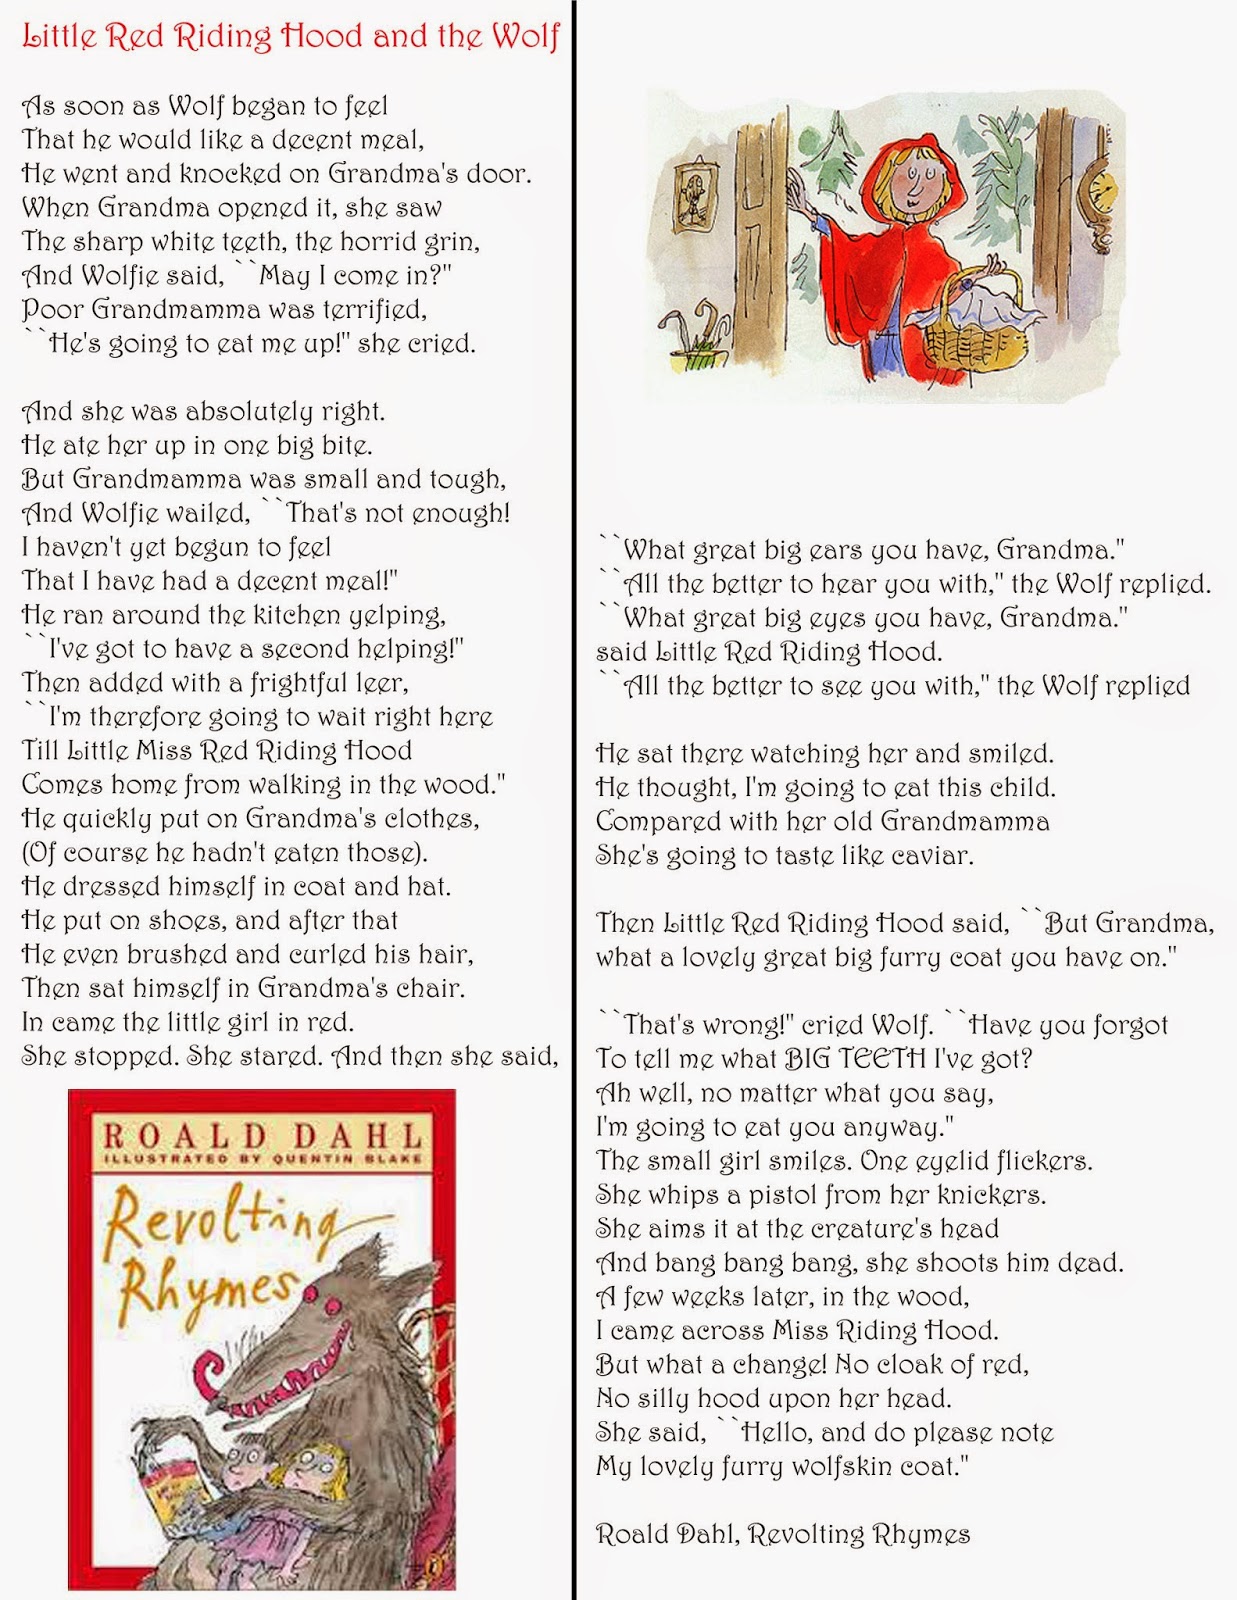 kindben Arctic Civic GooGooGallery: Little Red Riding Hood by Roald Dahl